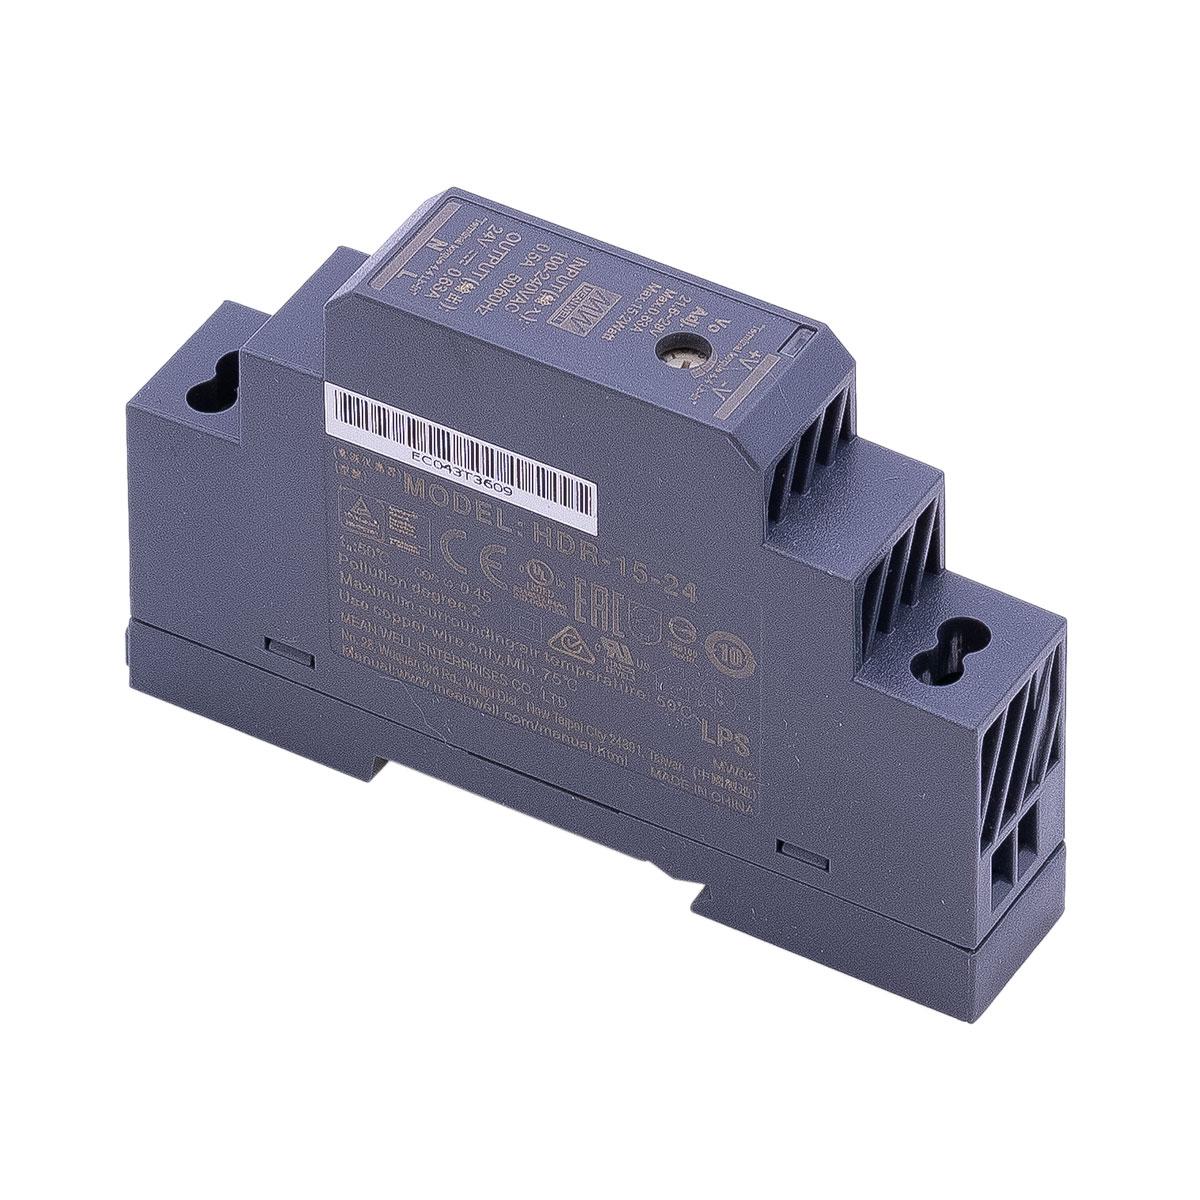 Mean Well HDR-15-24 LED Hutschienen Netzteil 15.2W 24V 0.63A DIN Rail CV